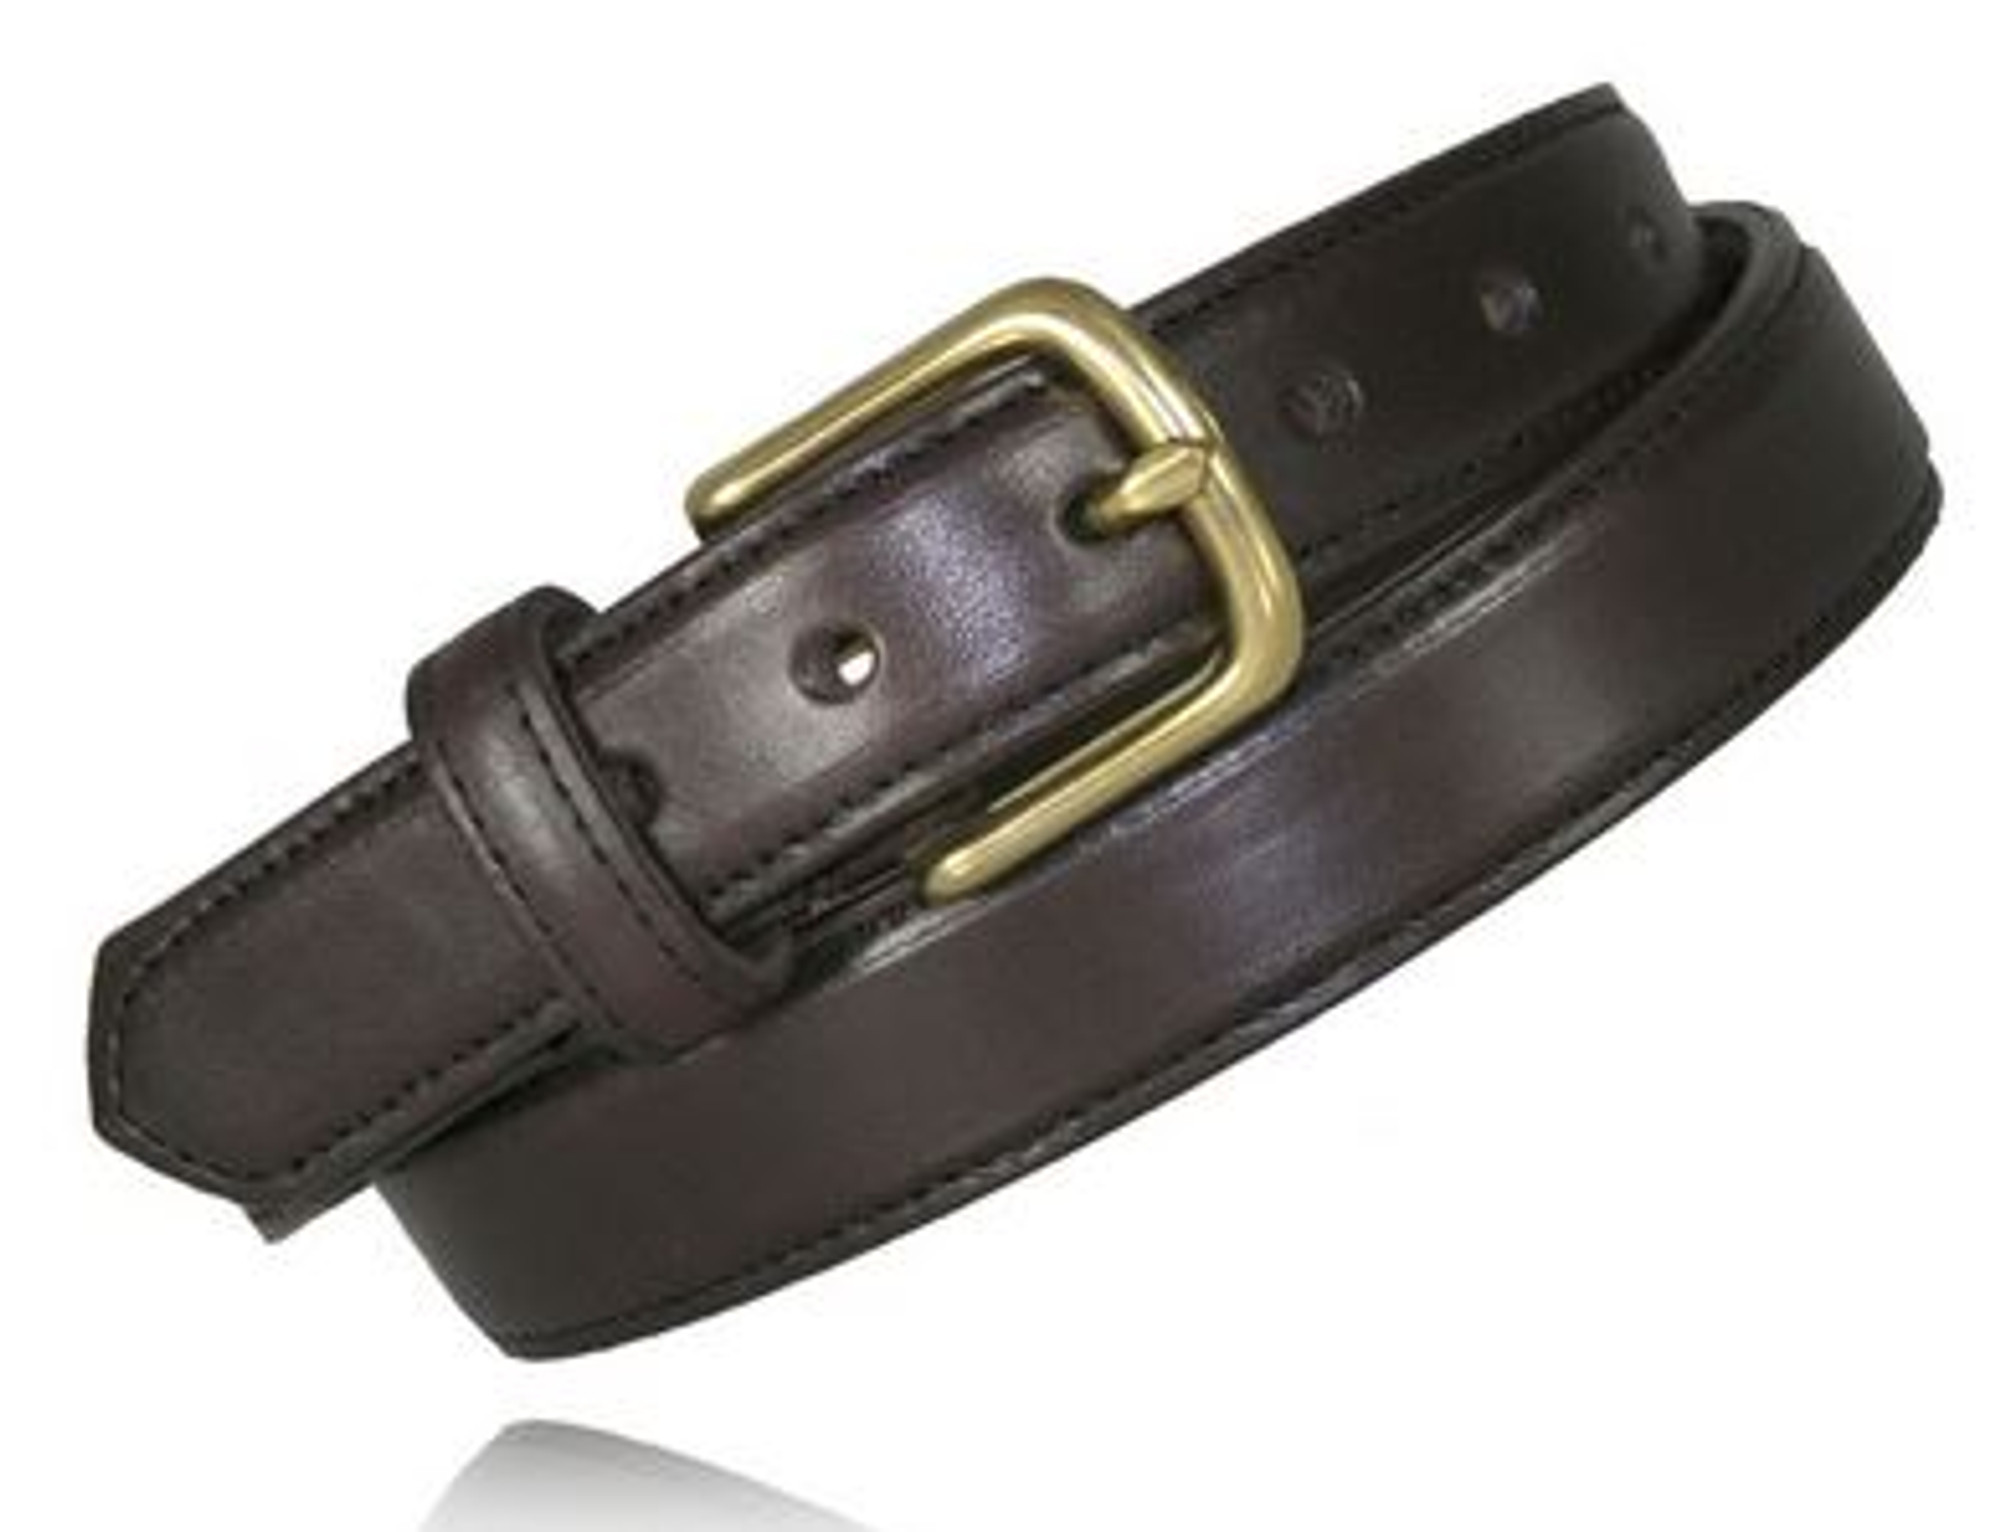 Boston Leather 6425 1.25" Feather Edge Dress Belt - Brown